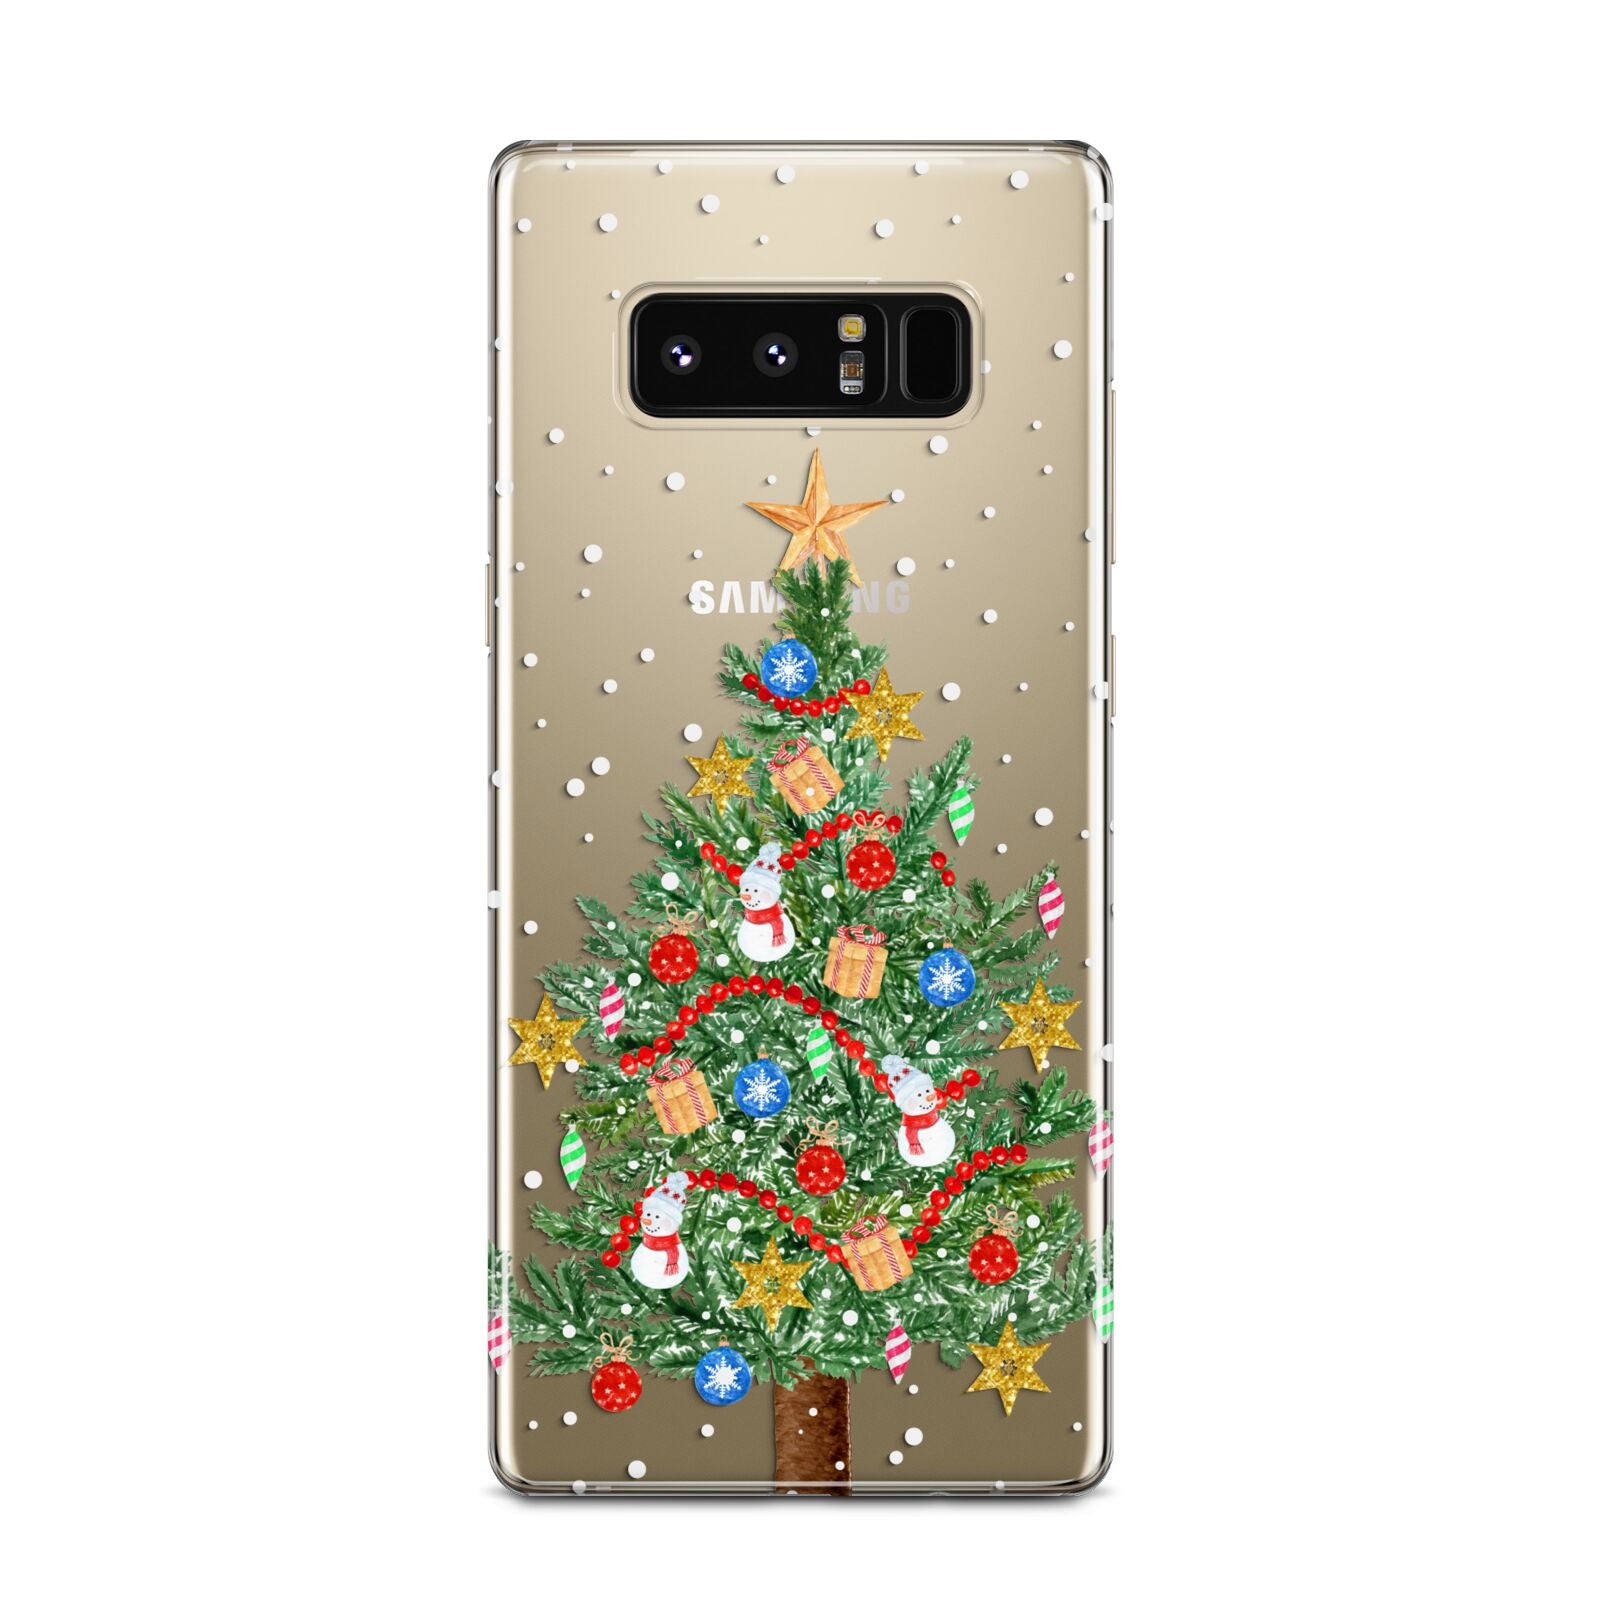 Sparkling Christmas Tree Samsung Galaxy Note 8 Case